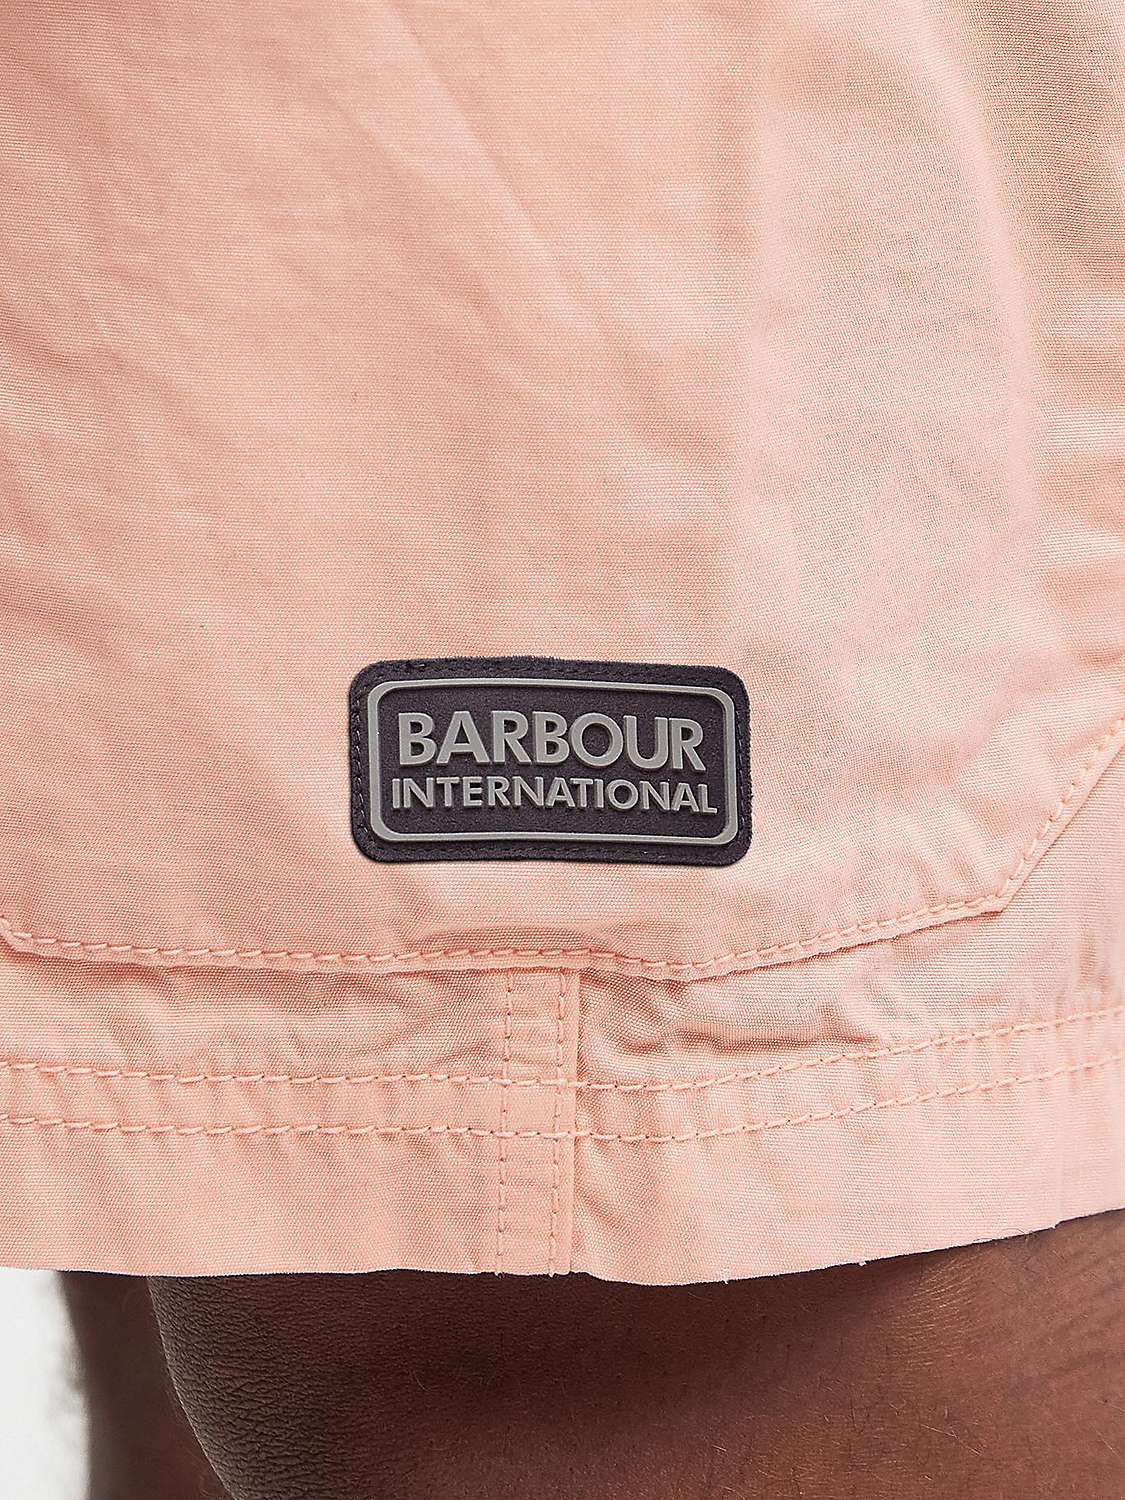 Buy Barbour International Gear Shorts Online at johnlewis.com